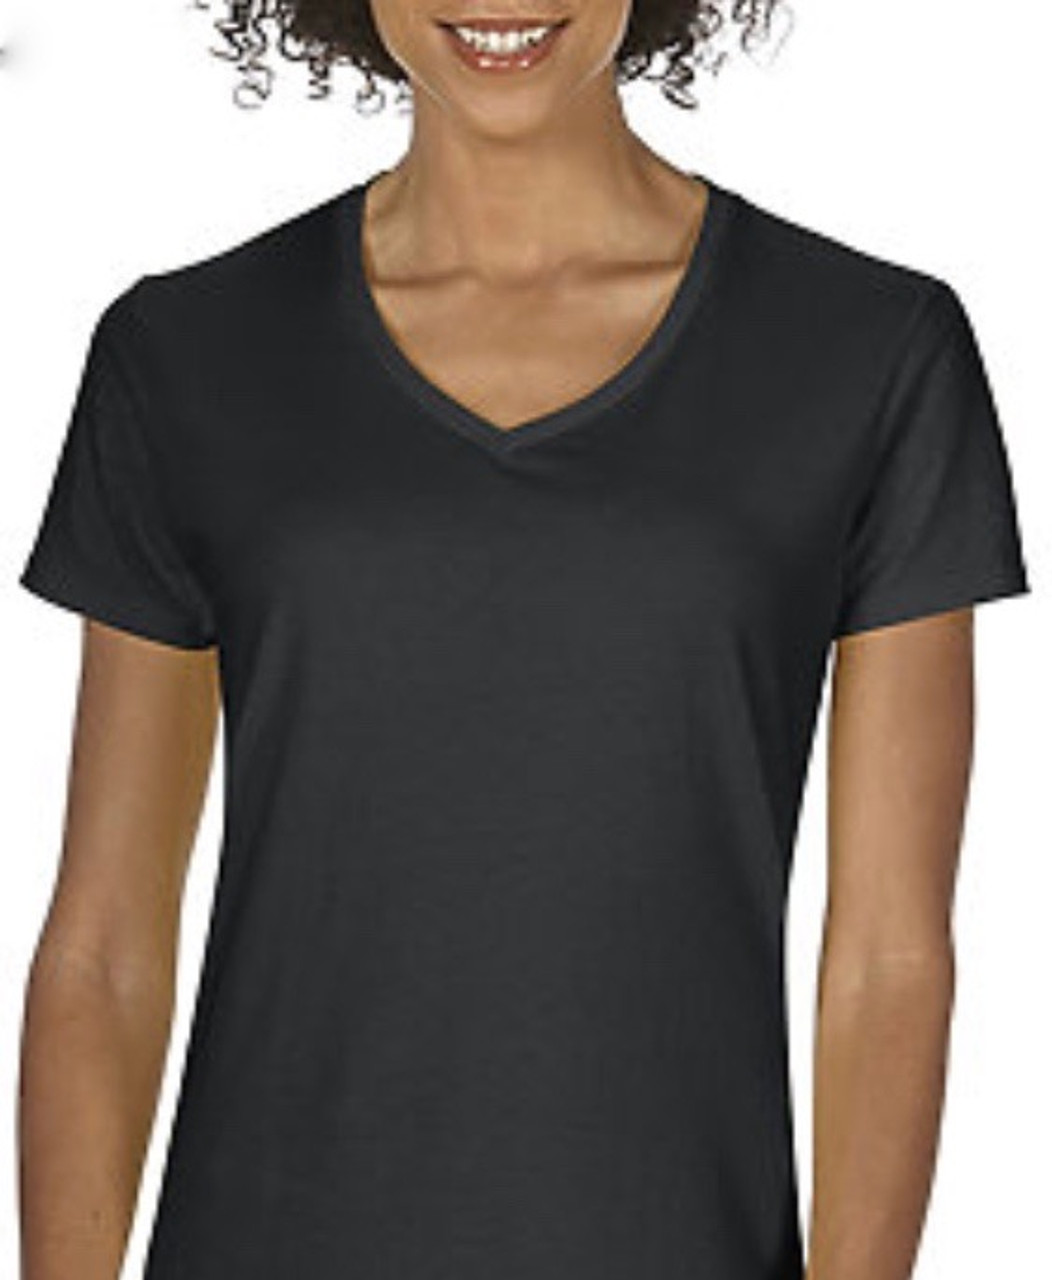 Women's T-Shirt Ladies V-Neck 100% cotton pre-shrunk (Black